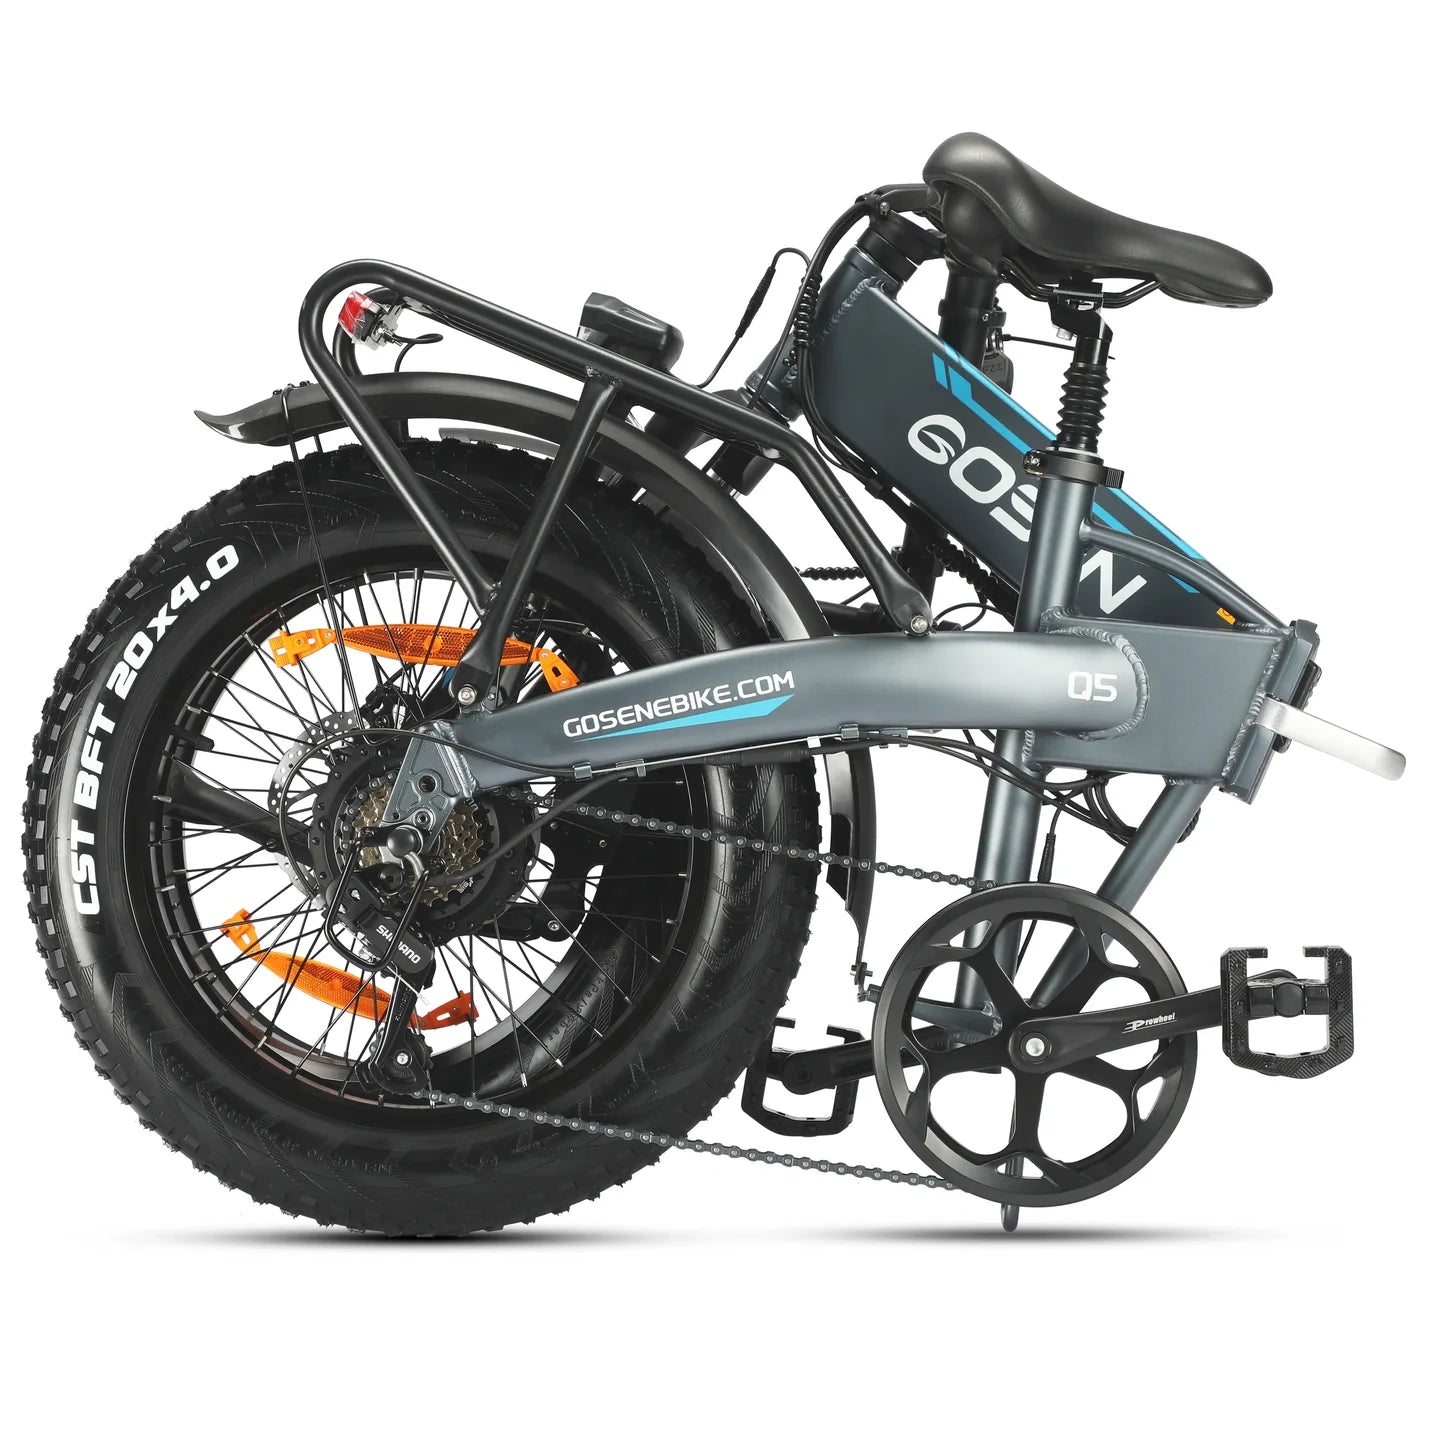 Gosen Q5 - Lightweight Folding Fat Tire E-Bike - CHARGED UP FREEDOM